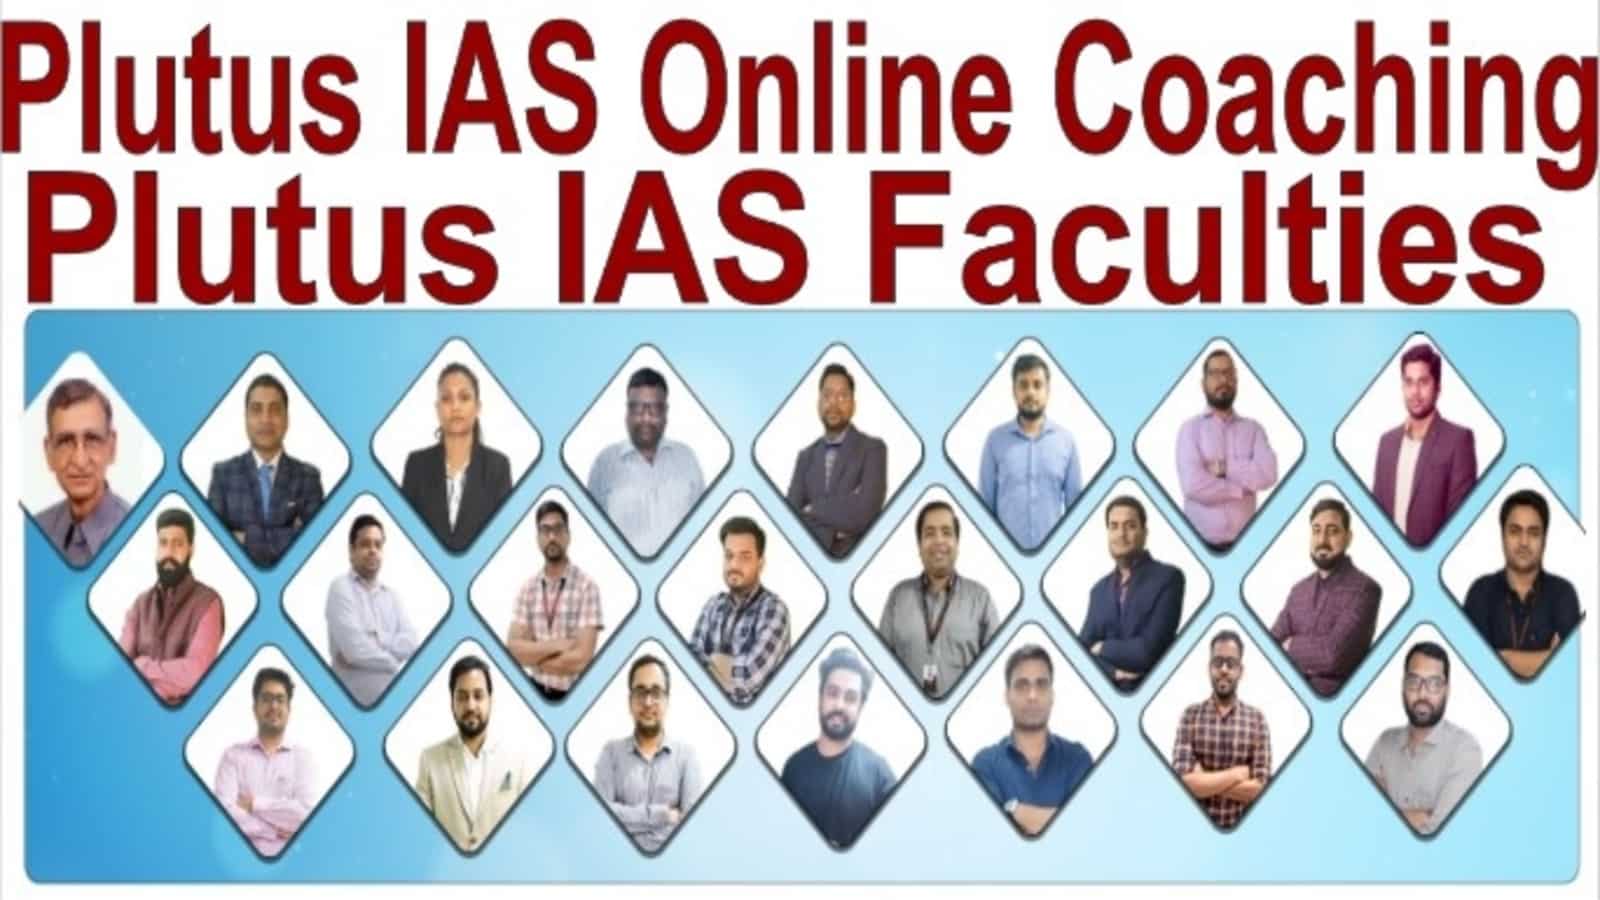 Plutus IAS Online Coaching Faculty